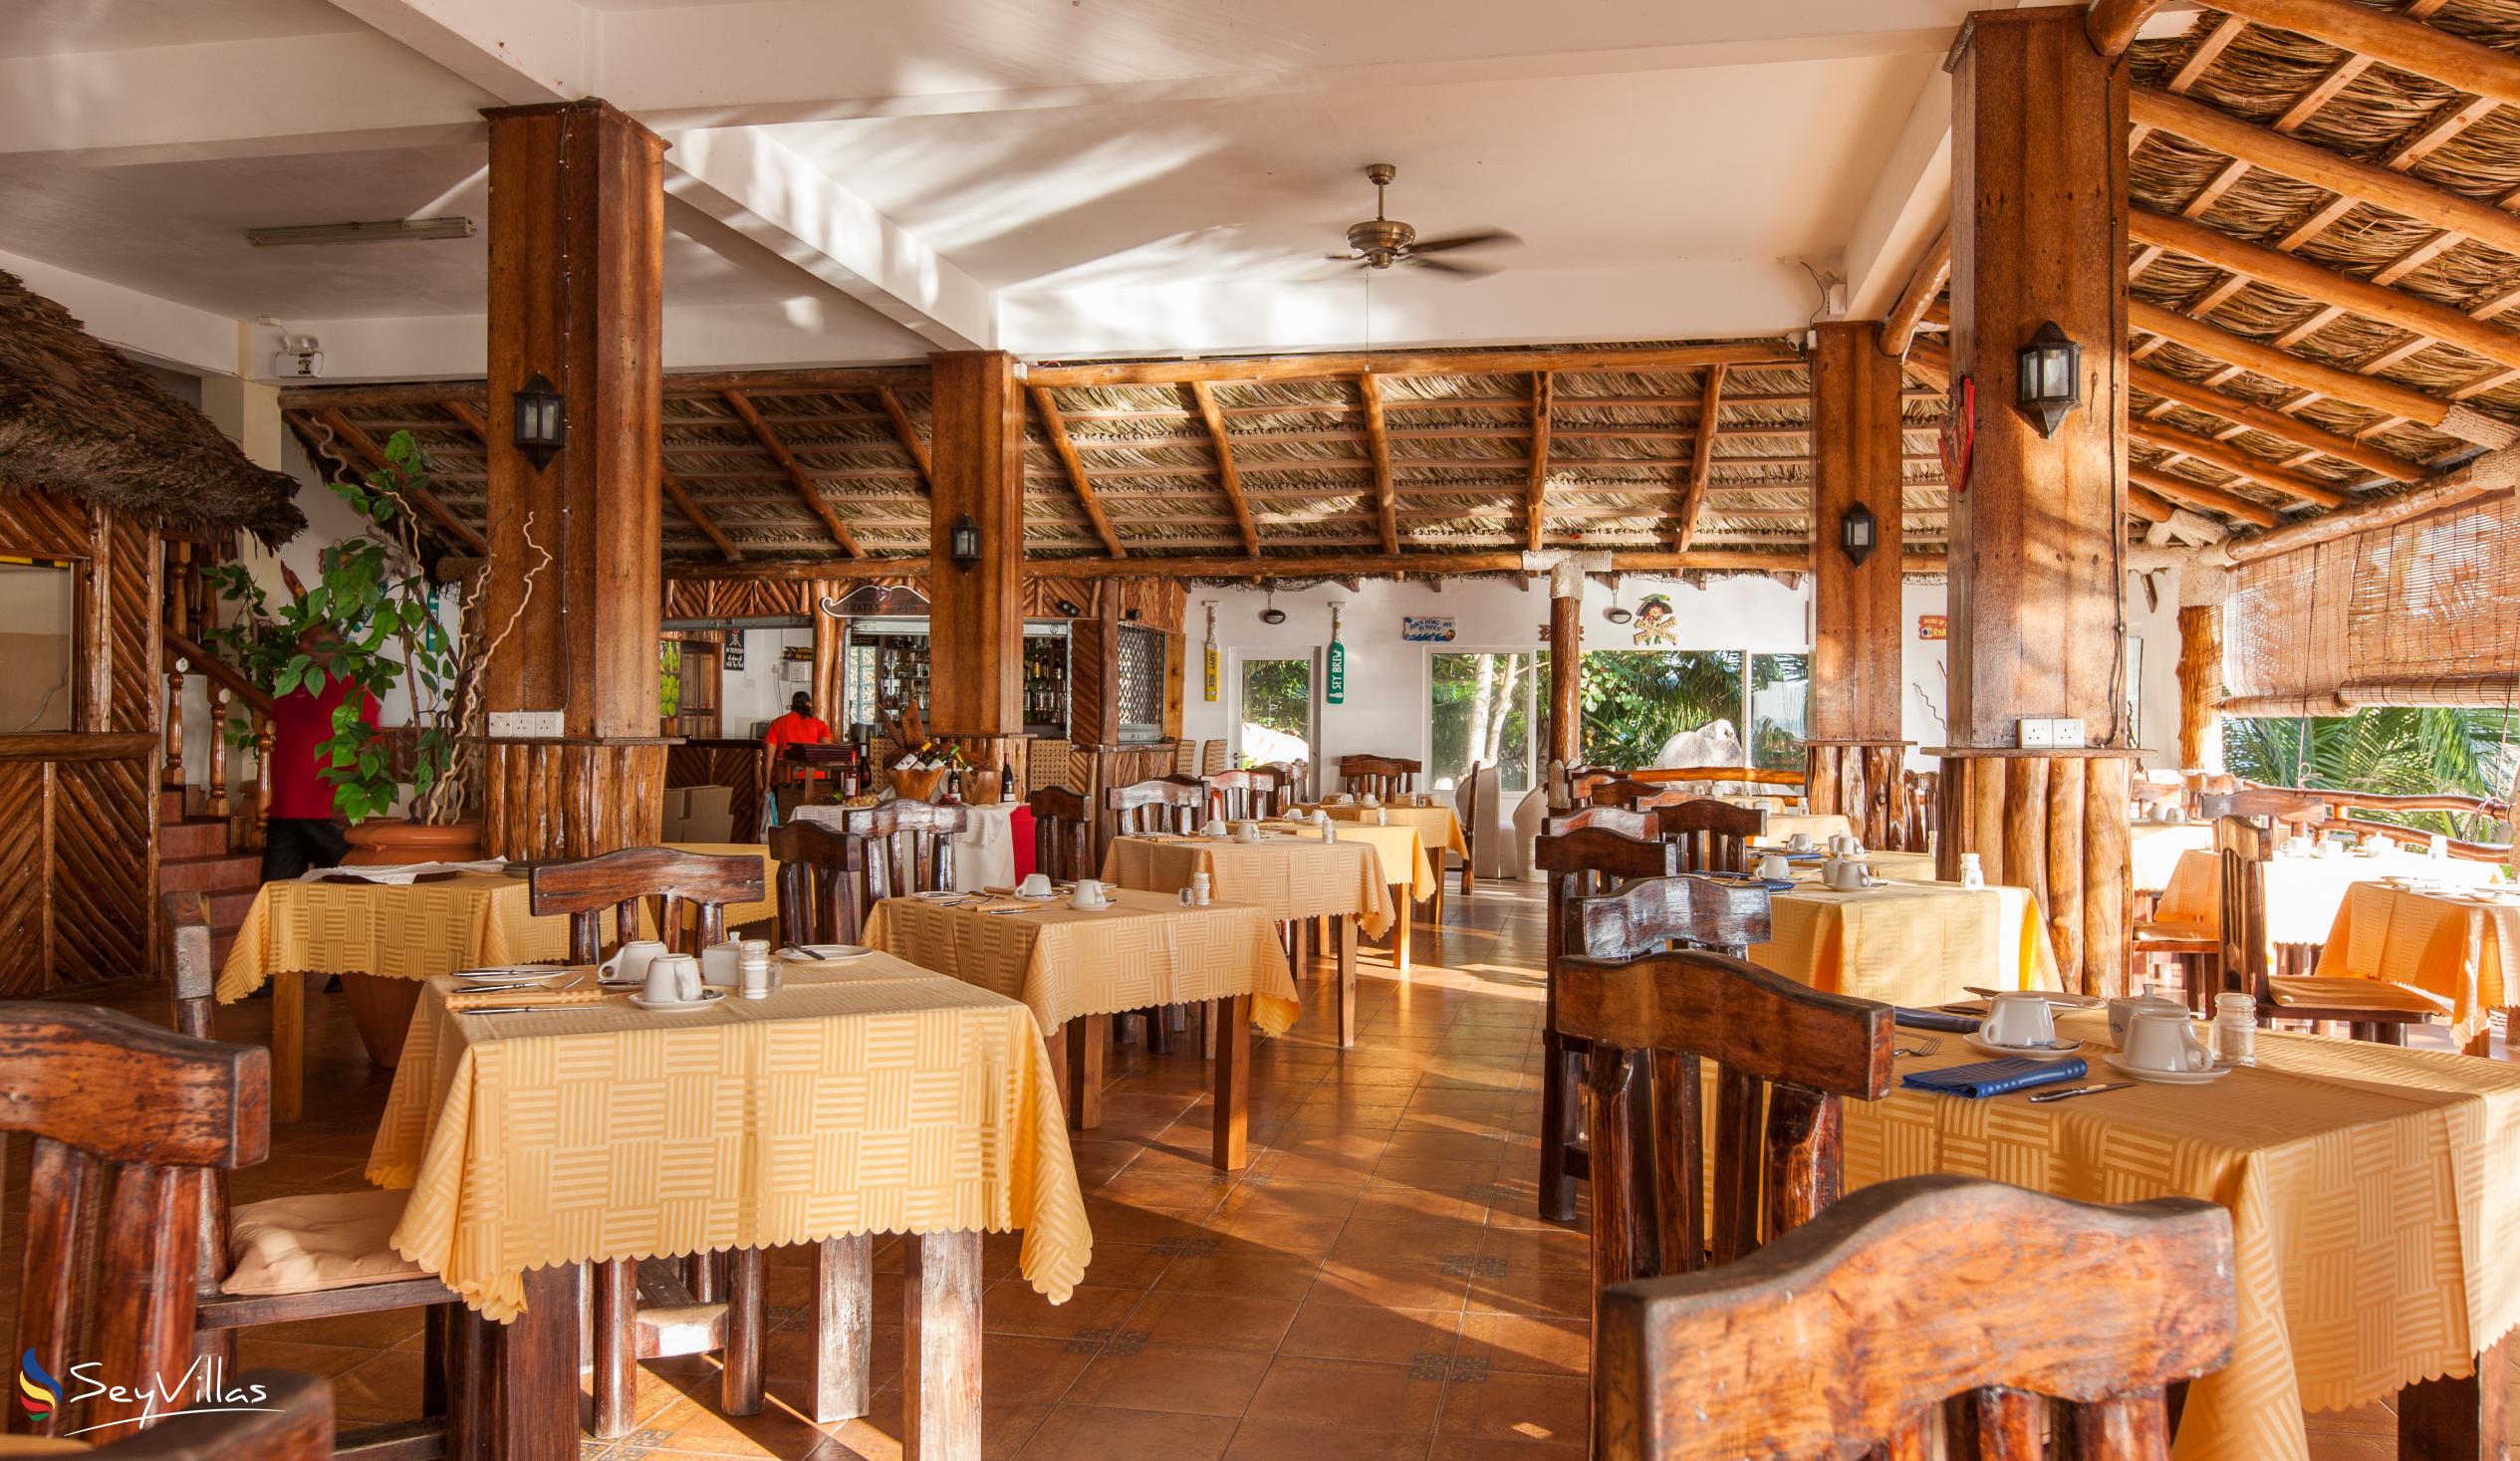 Foto 18: Patatran Village Hotel - Innenbereich - La Digue (Seychellen)